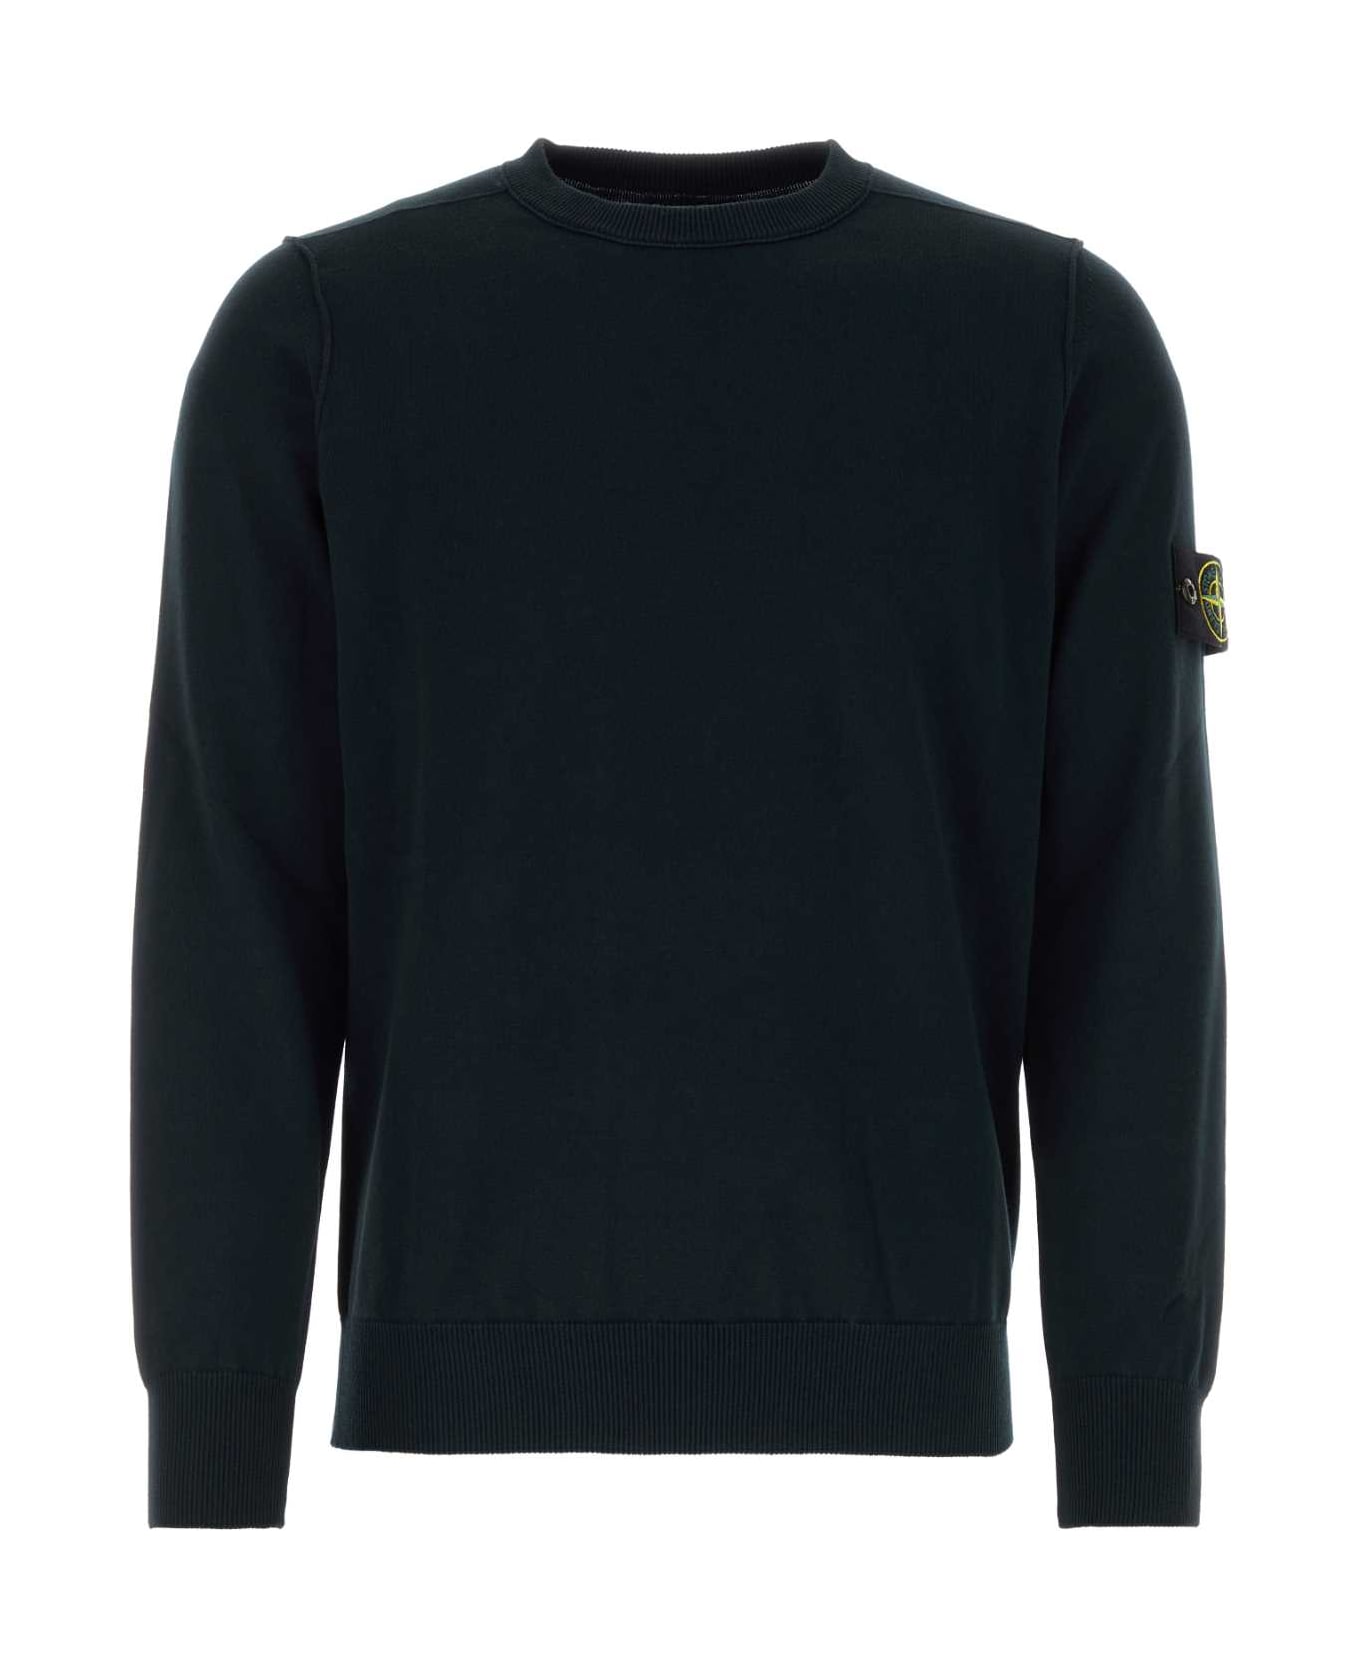 Stone Island Black Cotton Sweater - BLK